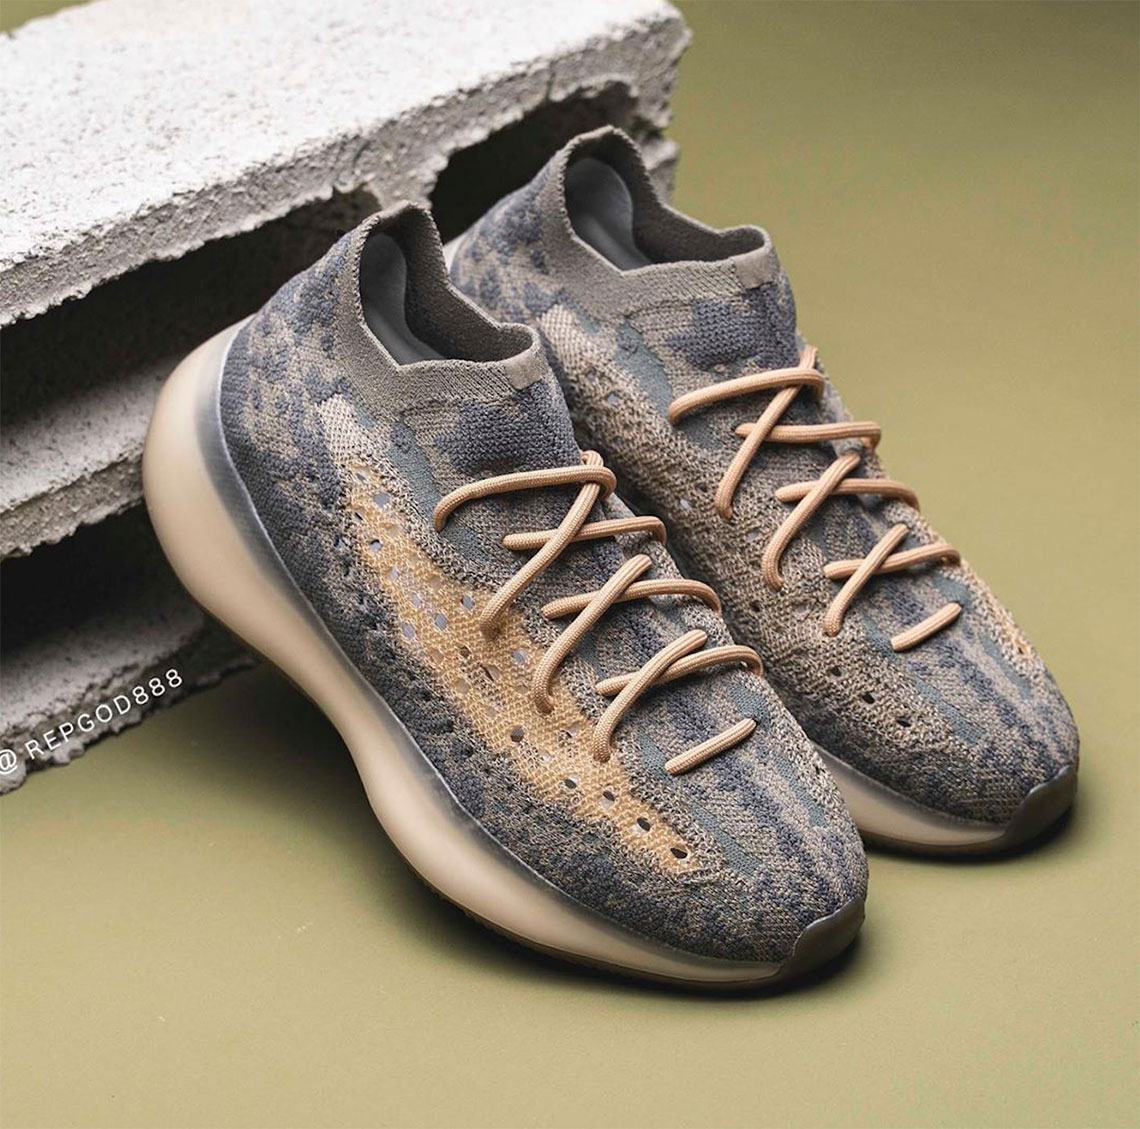 adidas Yeezy Boost 380 Mist Reflective Release Info | SneakerNews.com